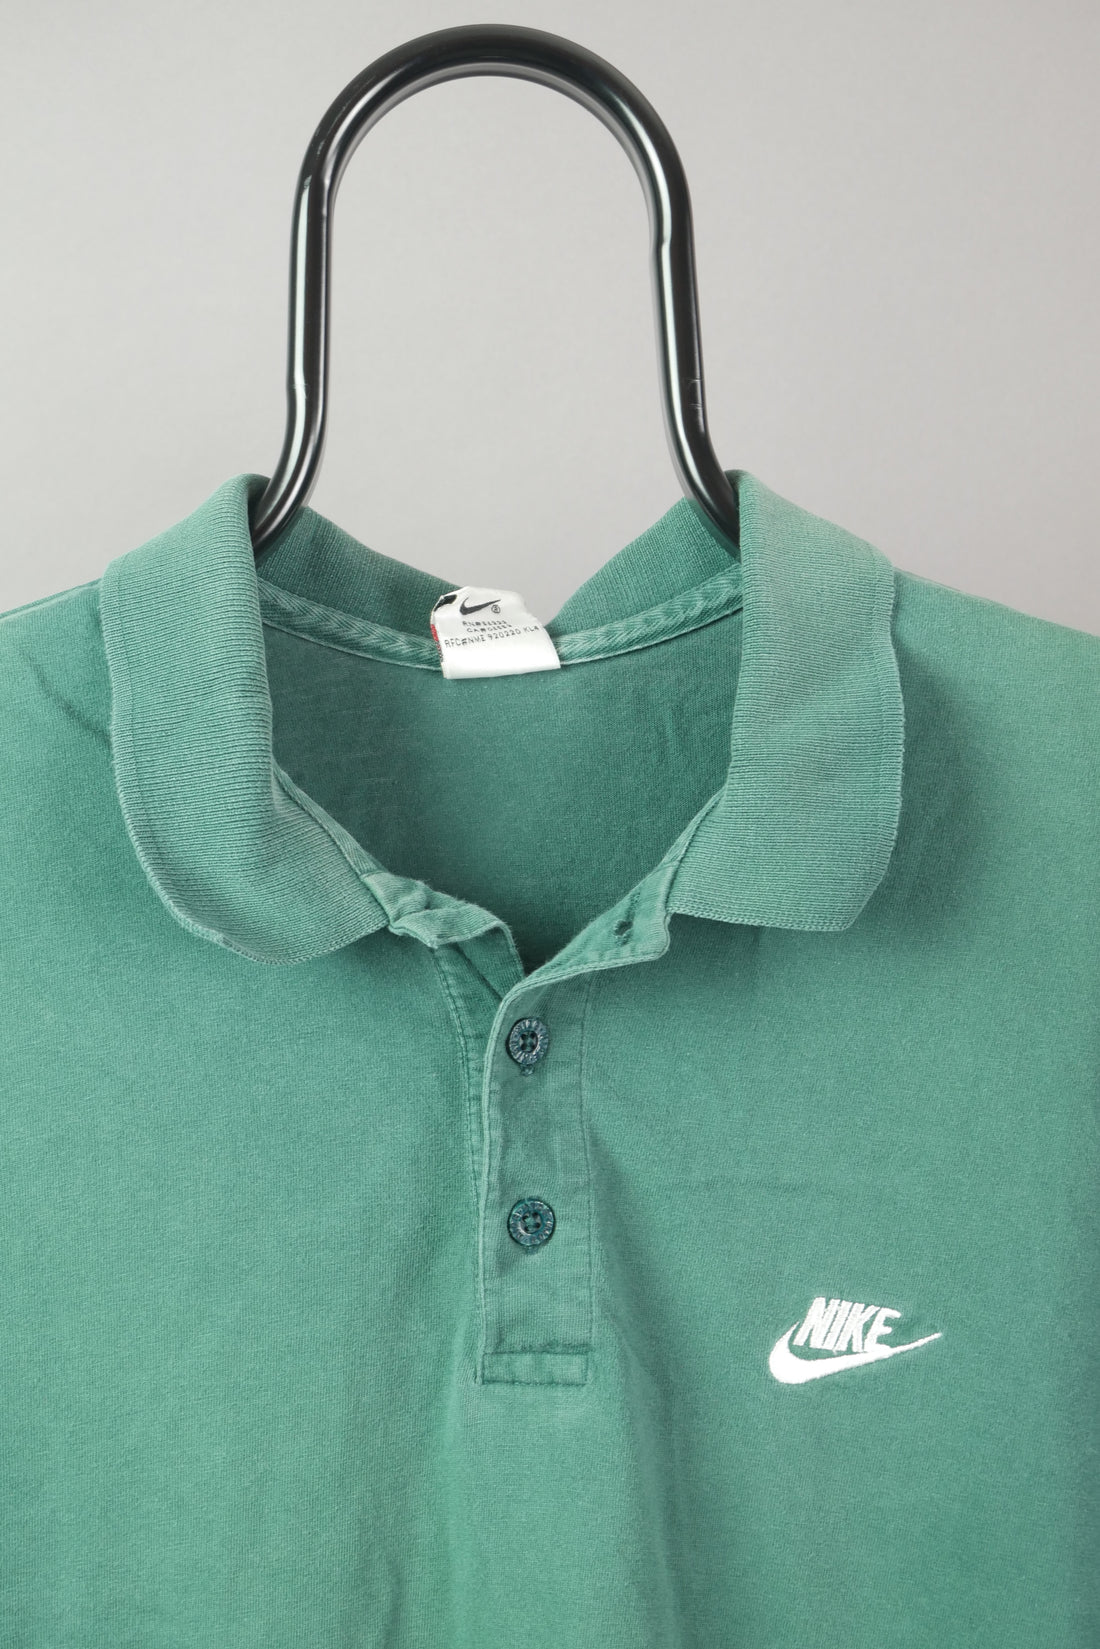 The 90s Nike Polo Shirt (XL)